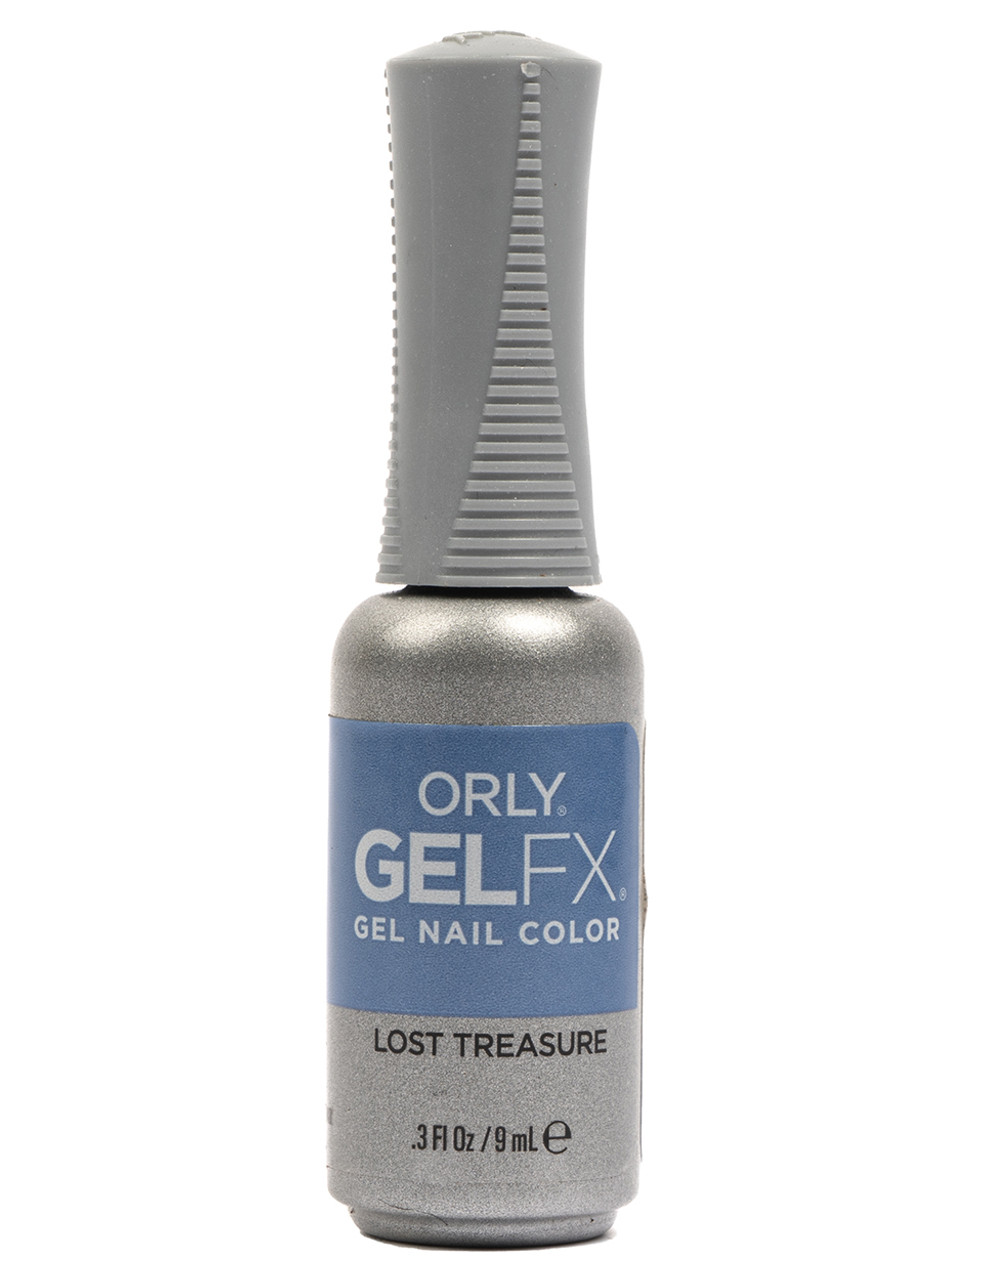 Orly Gel FX Soak-Off Gel Lost Treasure - .3 fl oz / 9 ml